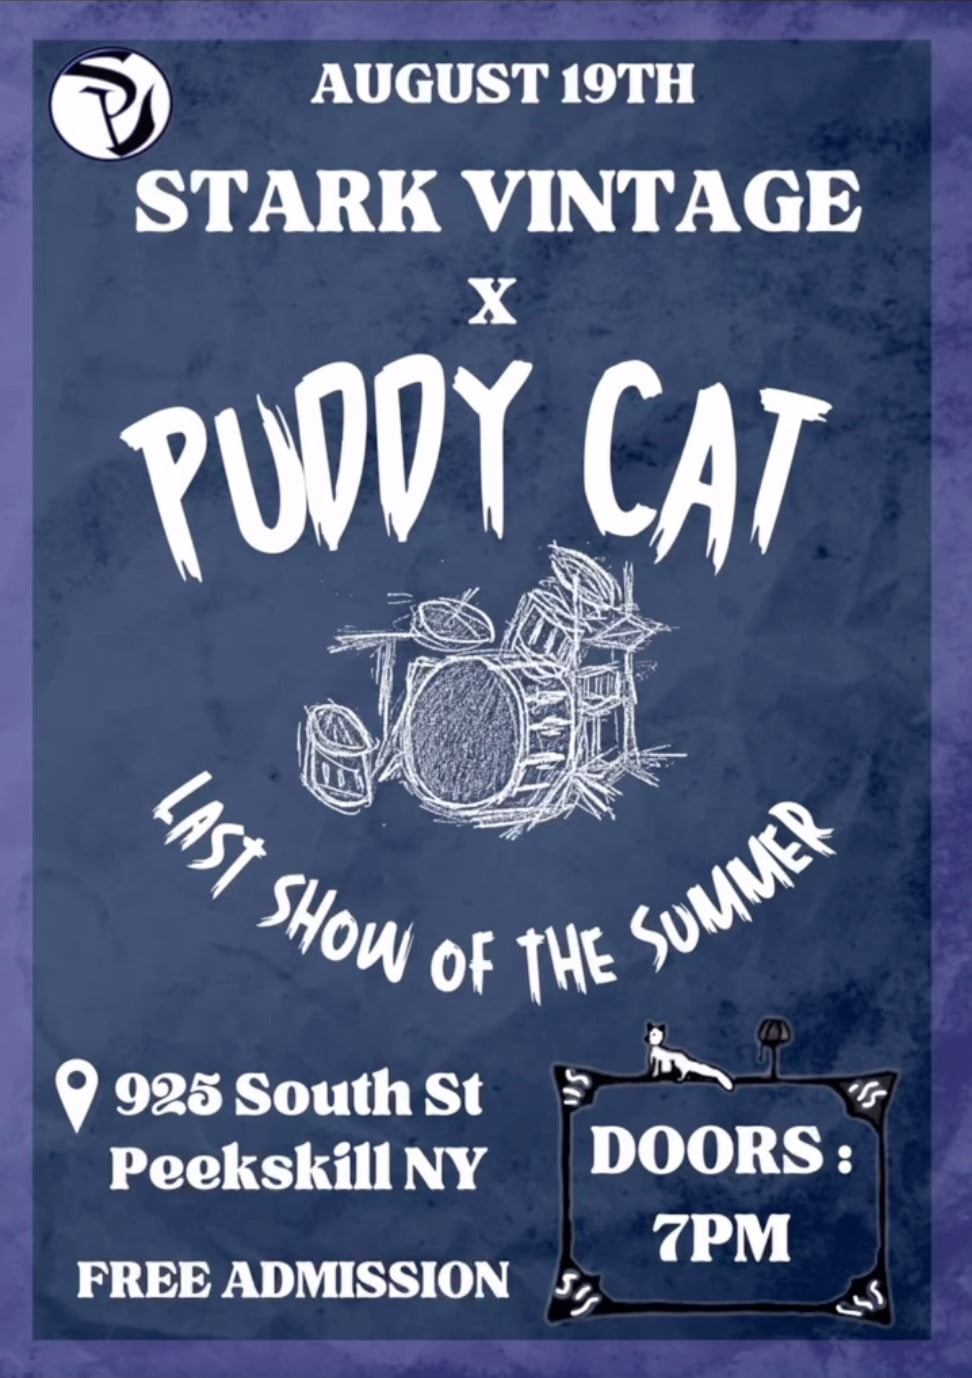 Flier for Stark Vintage x Puddy Cat